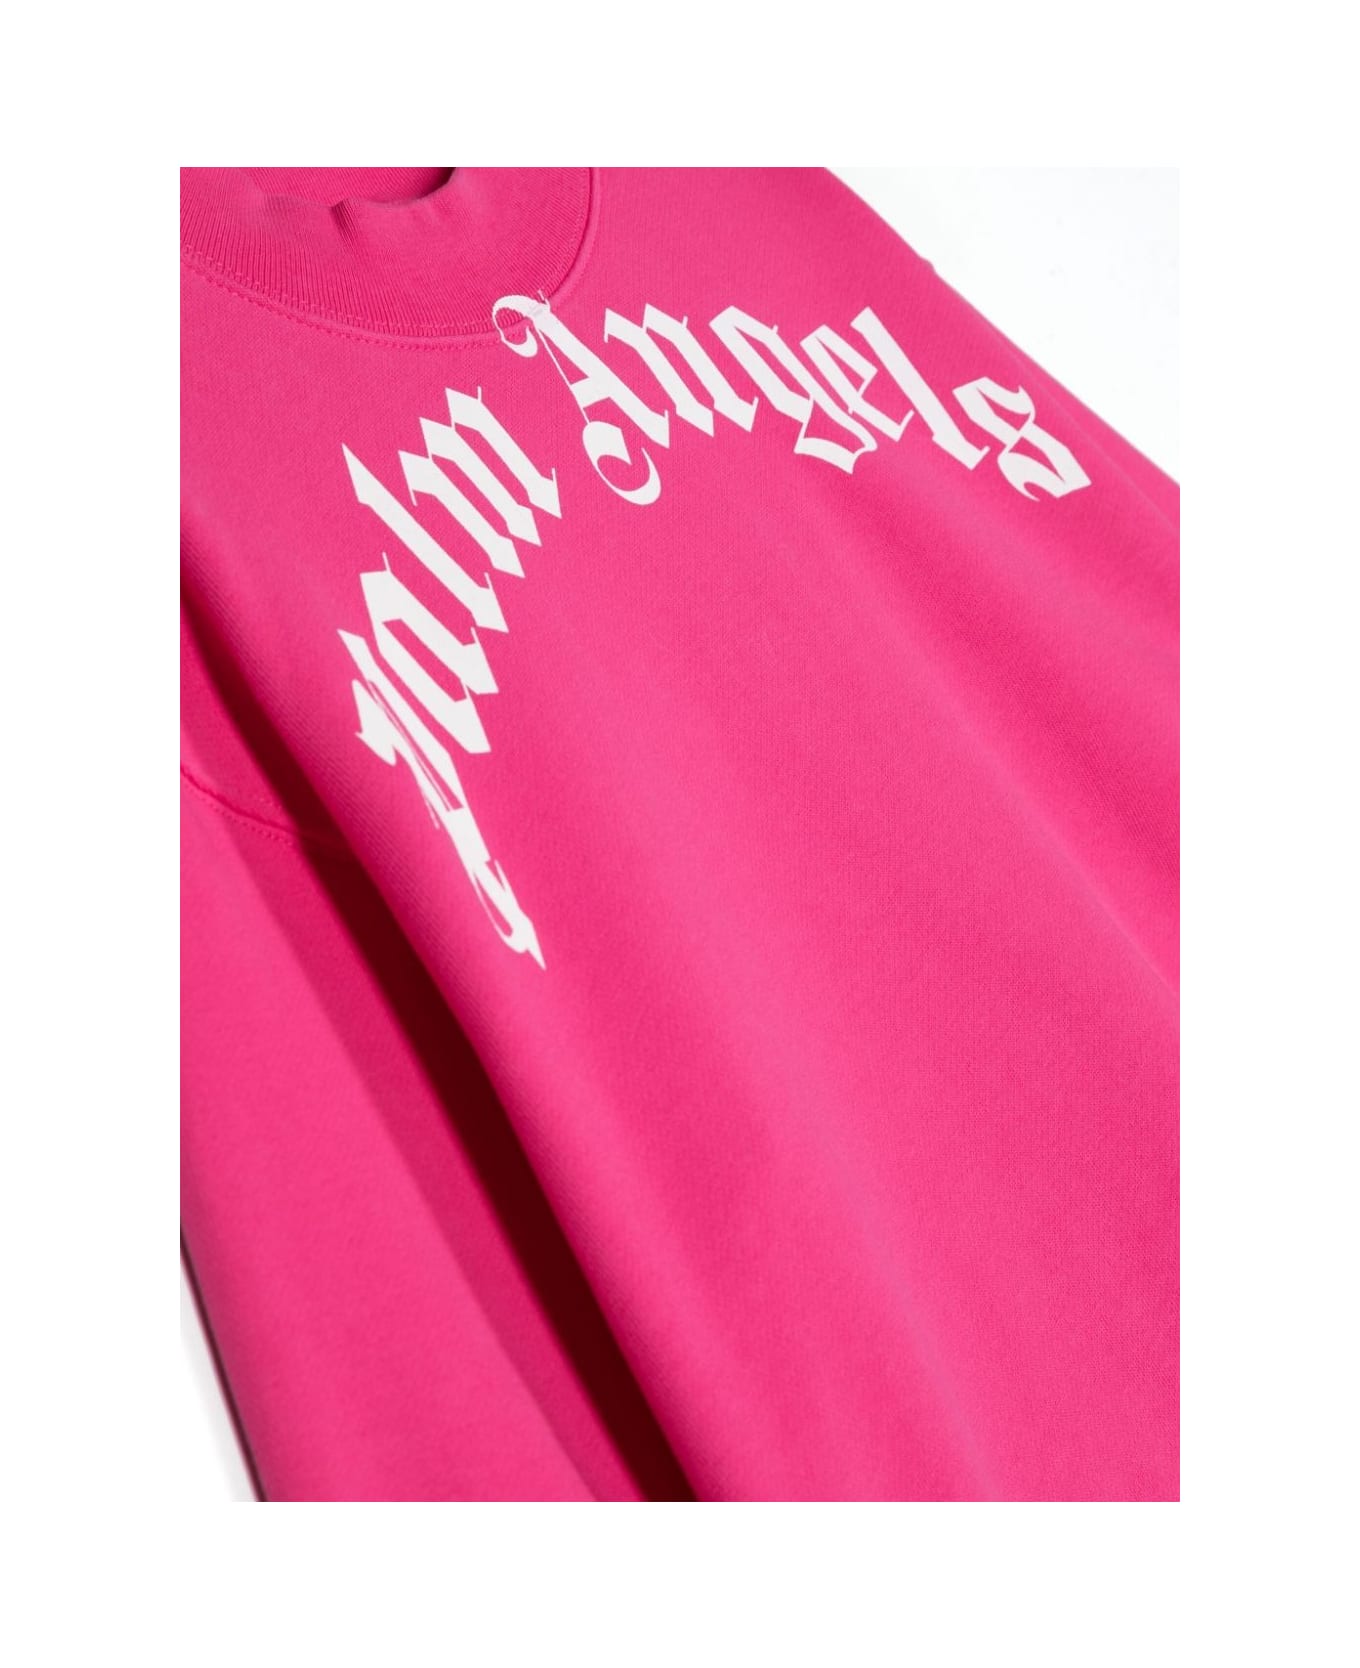 Palm Angels Fuchsia Crew Neck Sweatshirt With Curved Logo - Pink